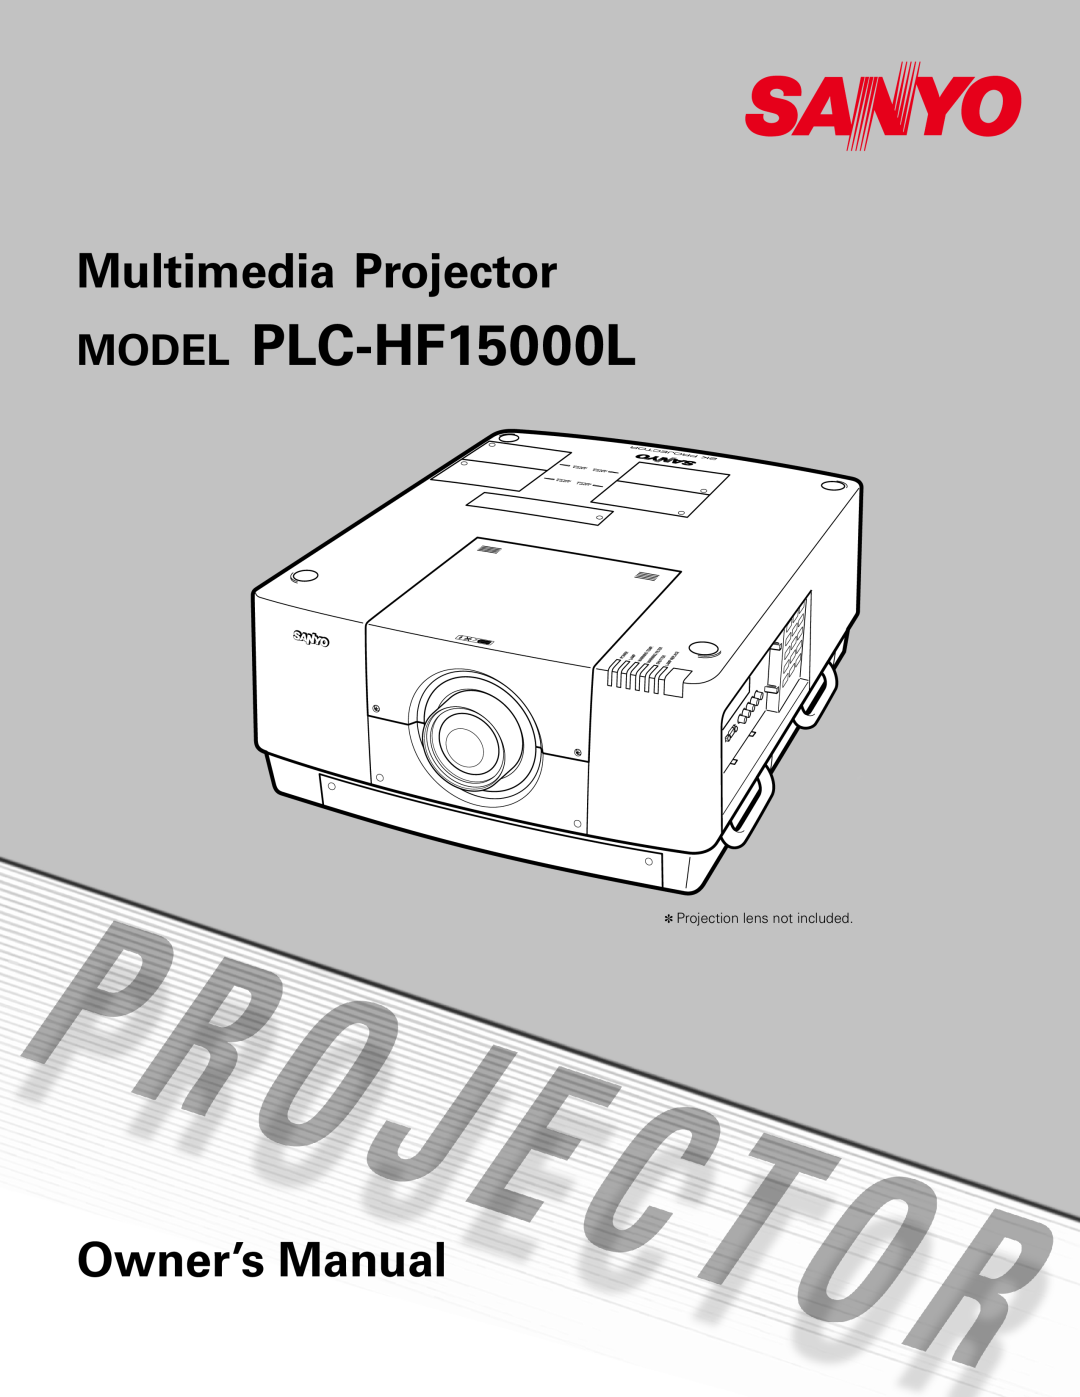 Sanyo owner manual MODEL PLC-HF15000L, Multimedia Projector, Owner’s Manual 